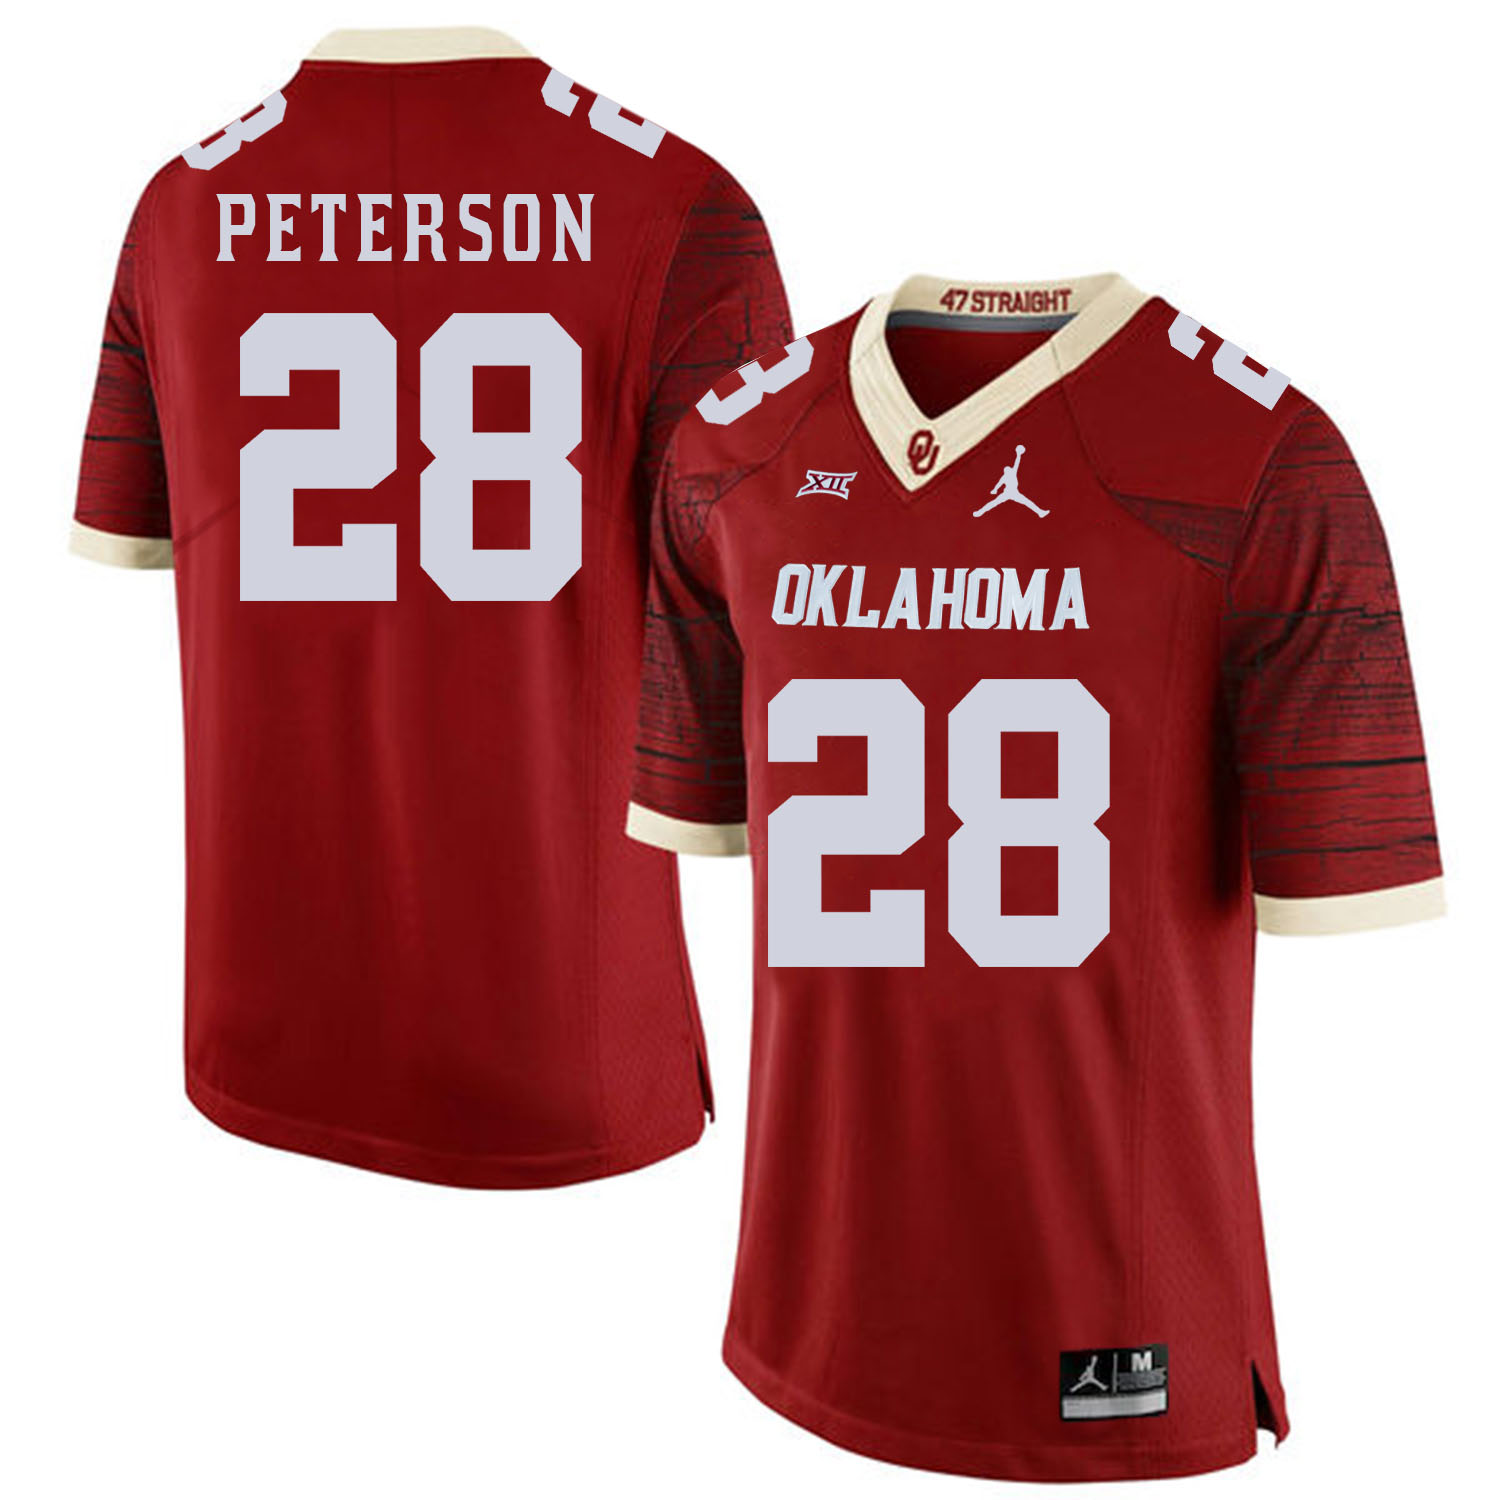 Oklahoma Sooners 28 Adrian Peterson Red 47 Game Winning Streak College Football Jersey